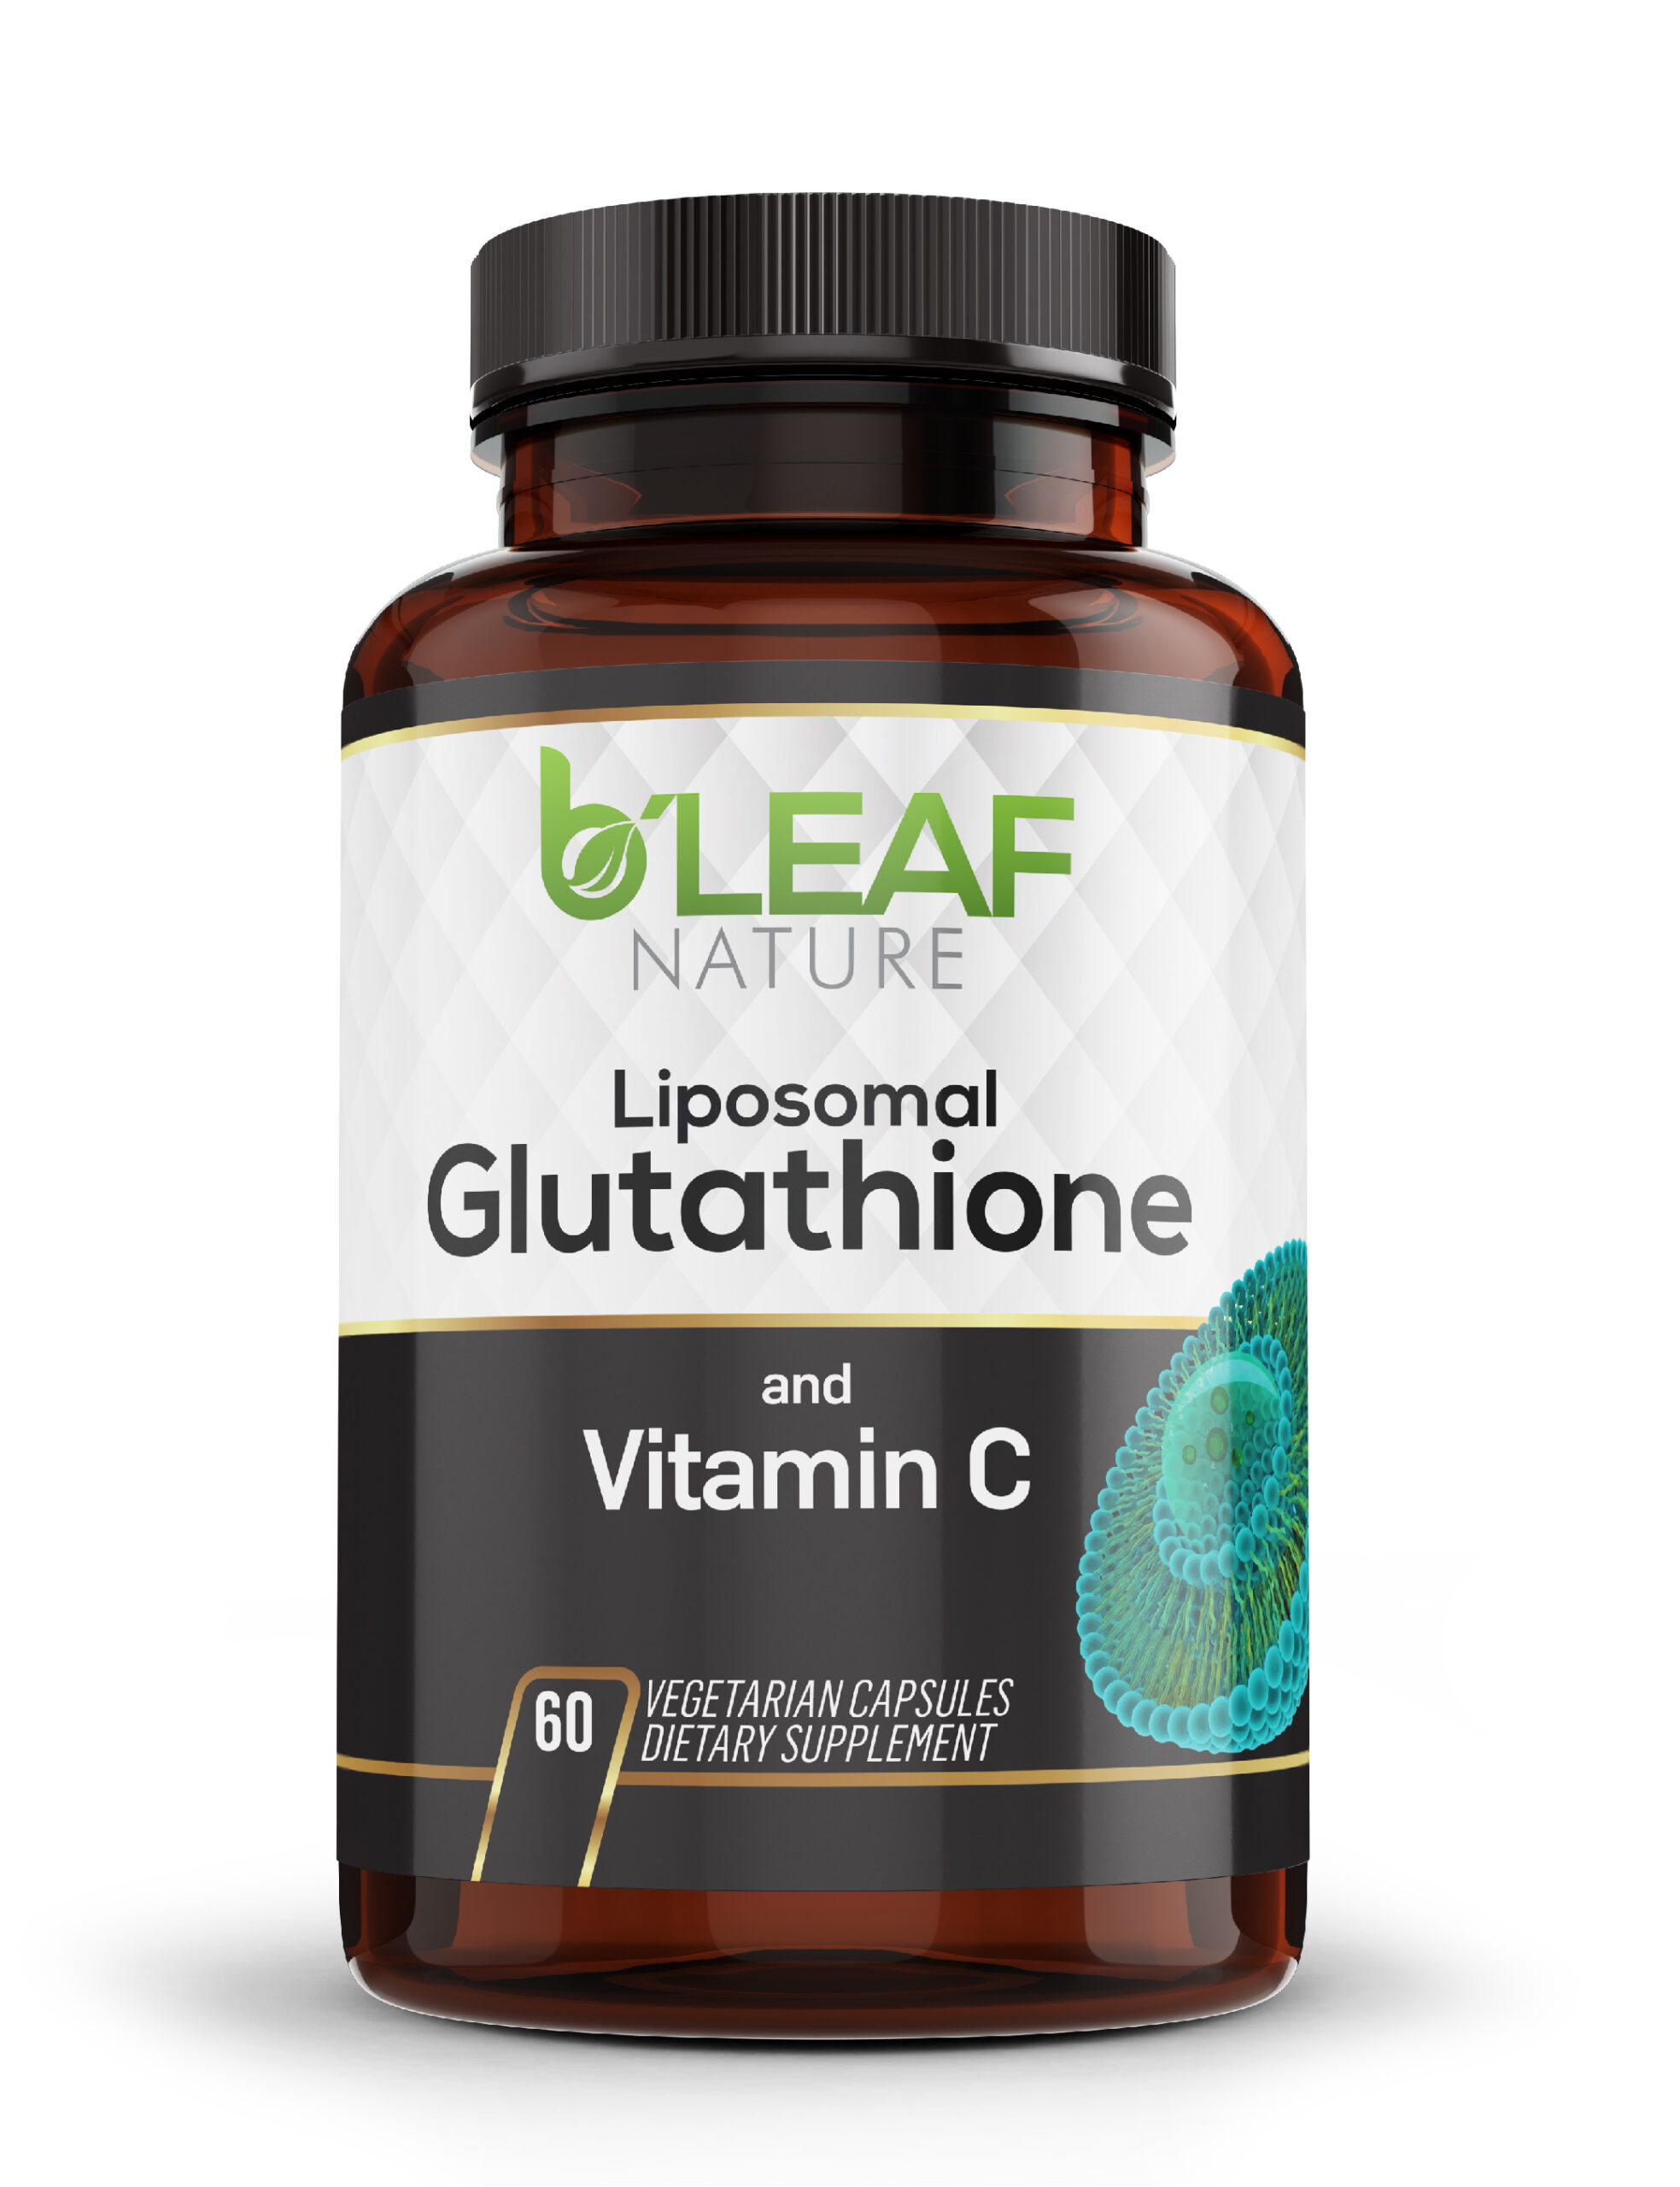 Liposomal Glutathione maximum absorption